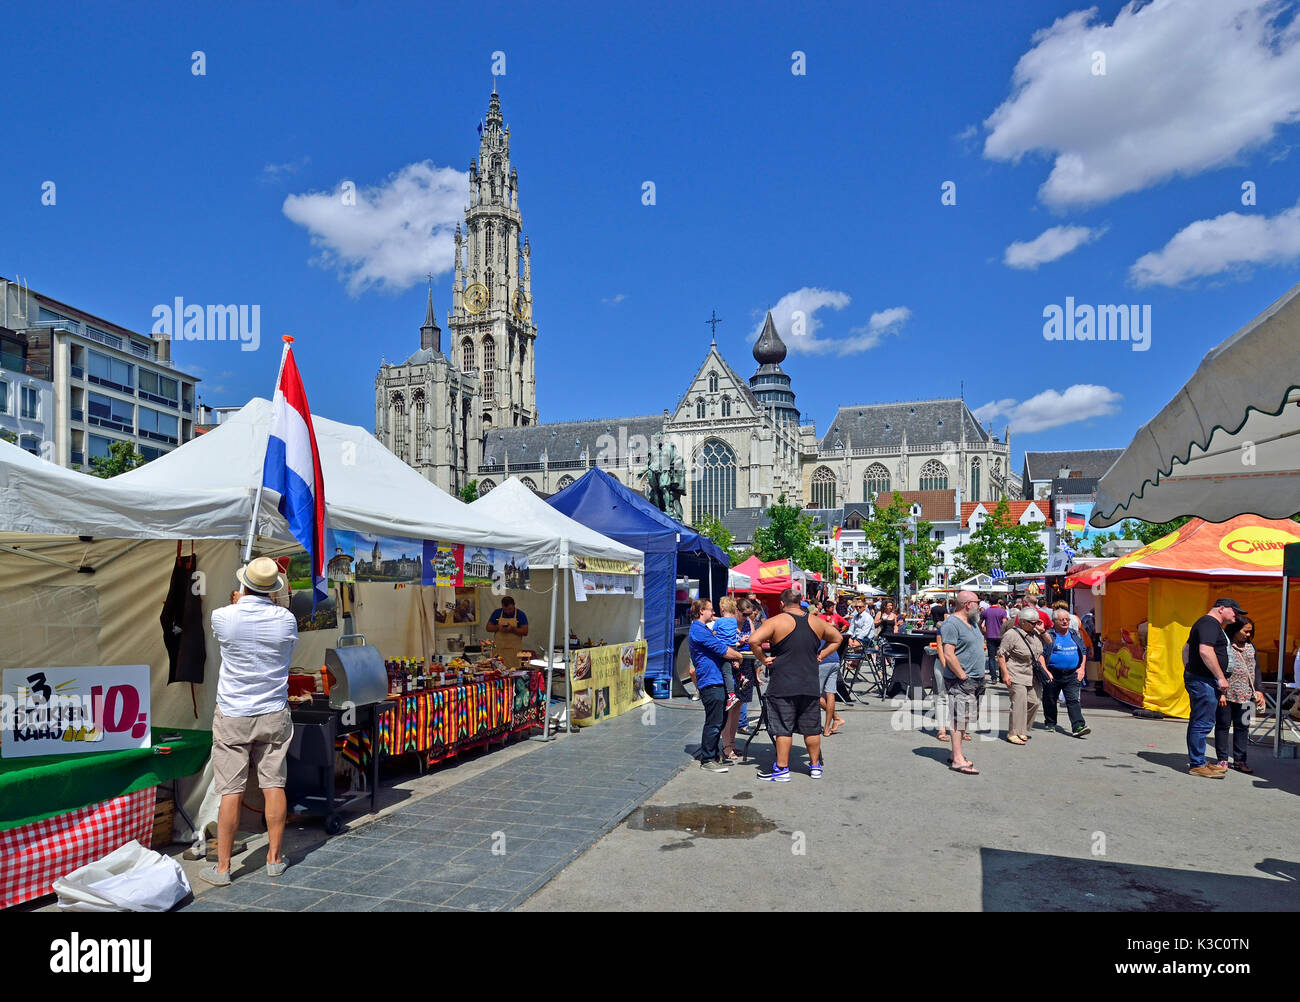 Anversa, Belgio. Mercato in Groenplaats - cattedrale dietro Foto Stock